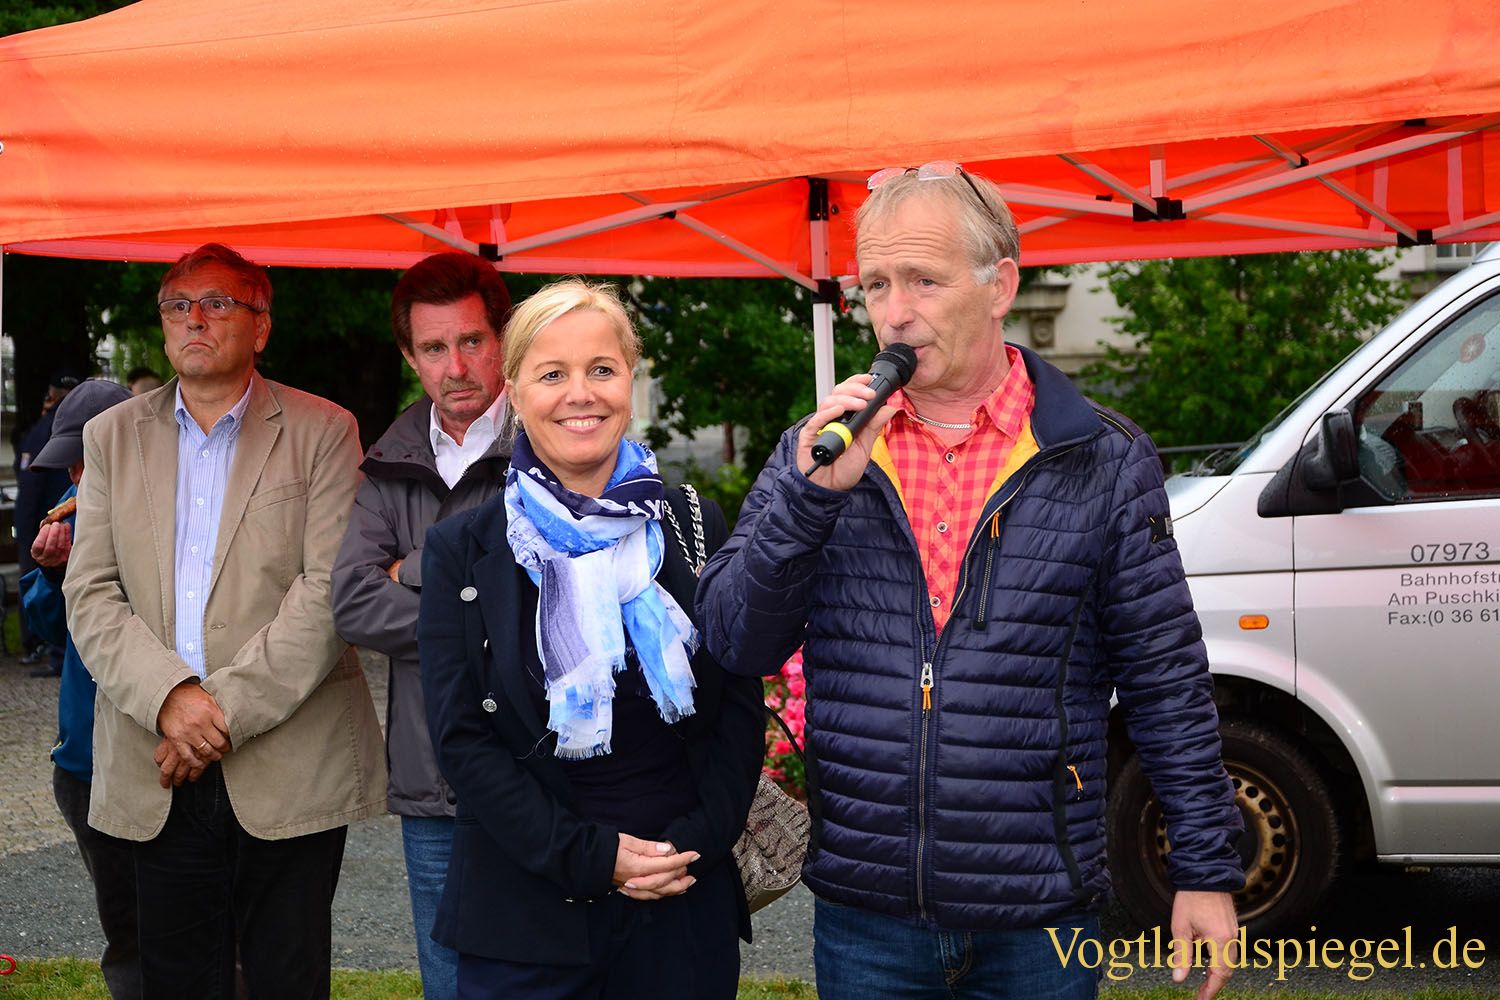 Initiativgruppe "Meine Kreisstadt Greiz" kündigt heißen Herbst an